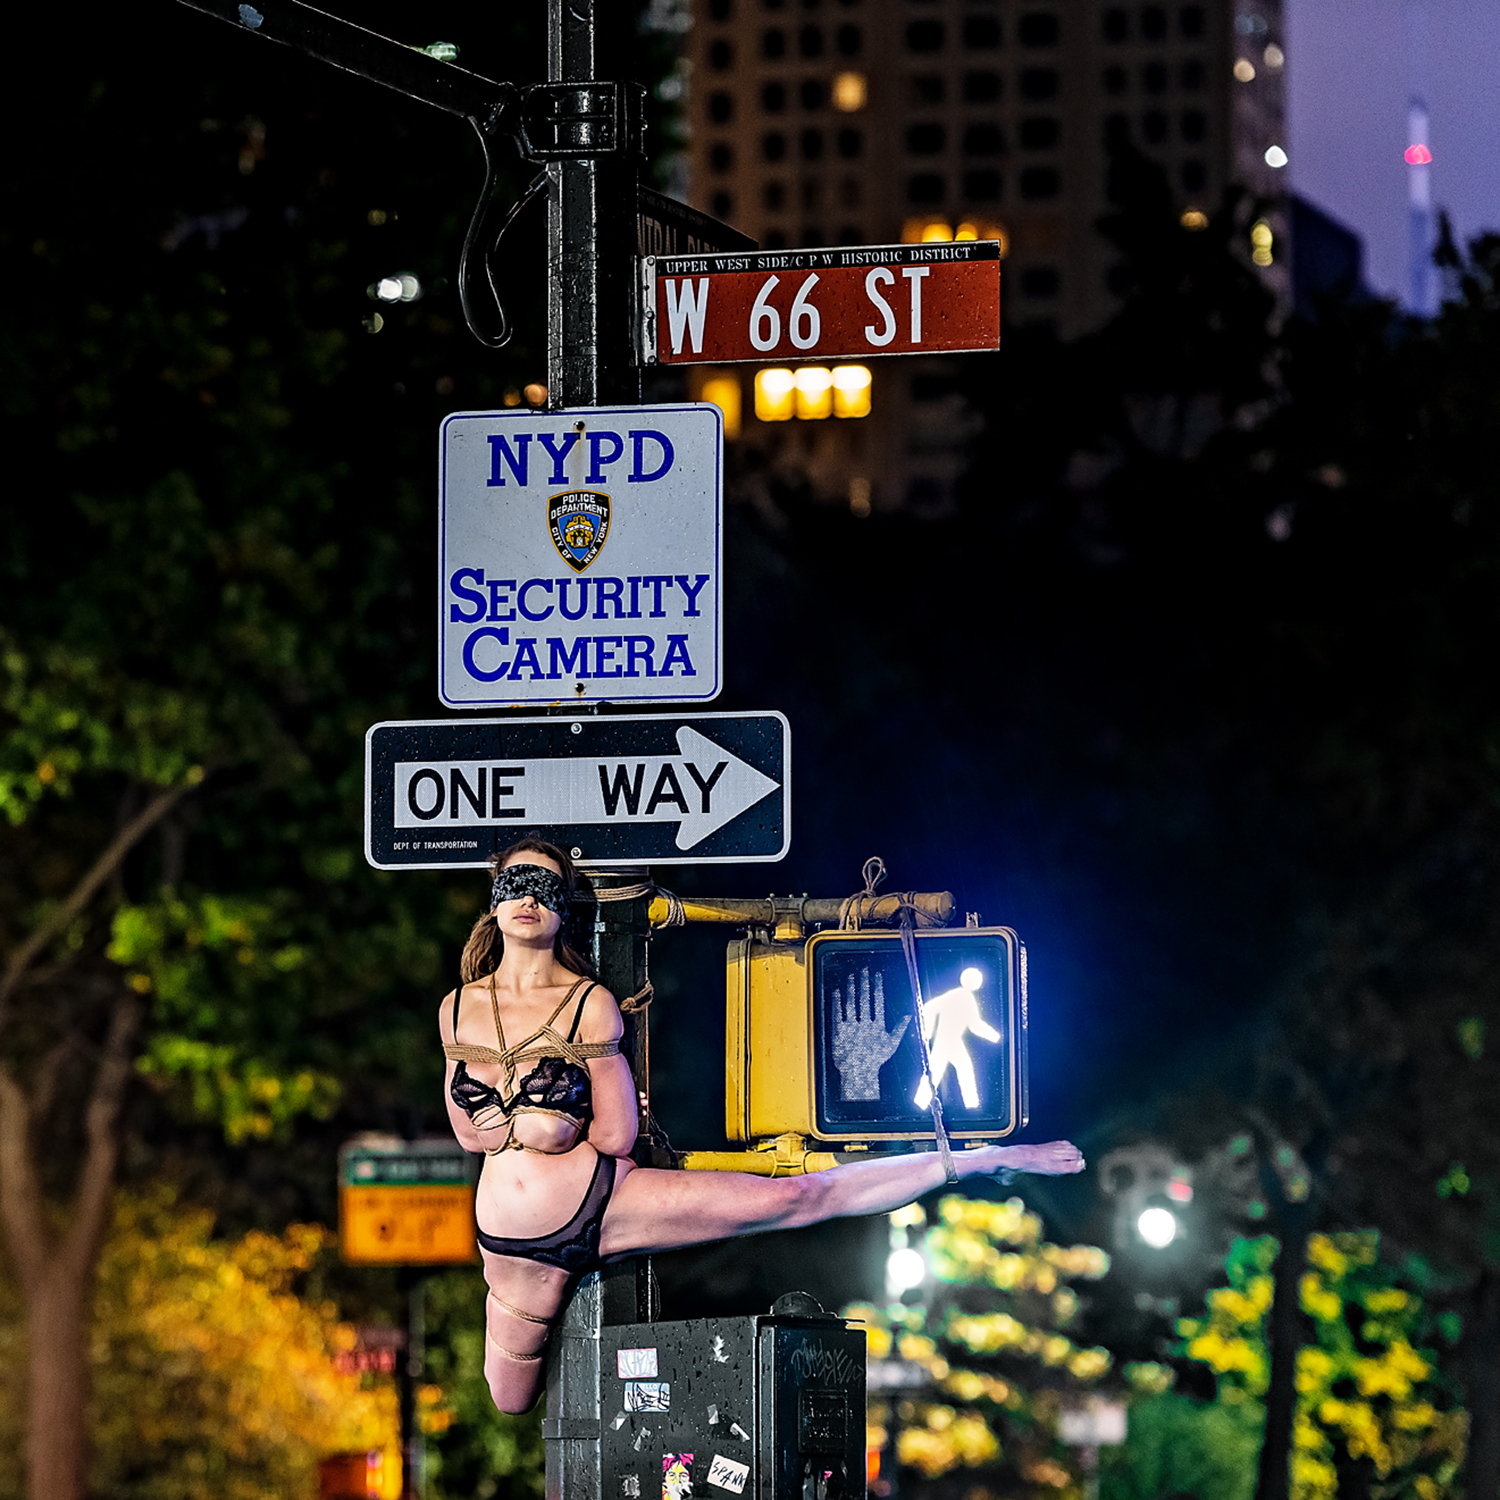 One way sign, nyc, new york photo, shibari model rope bondage